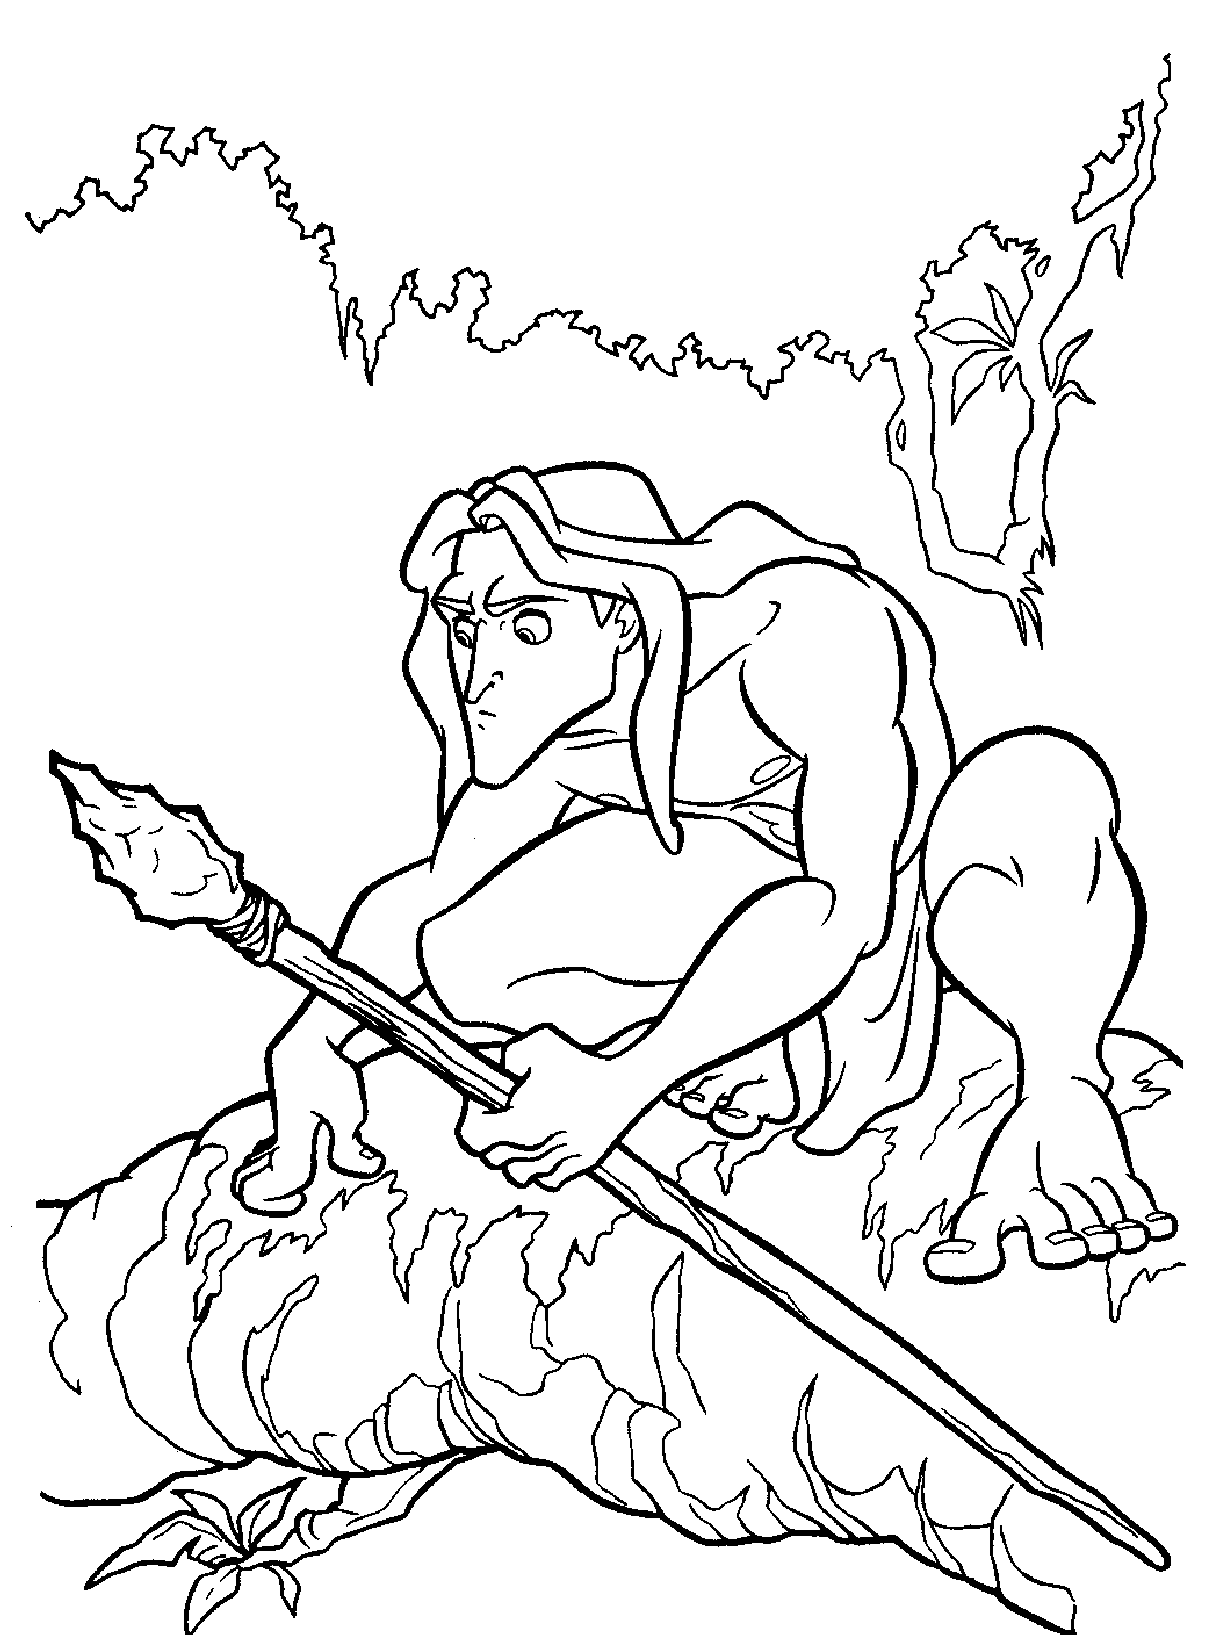 Tarzan In The Jungle coloring page